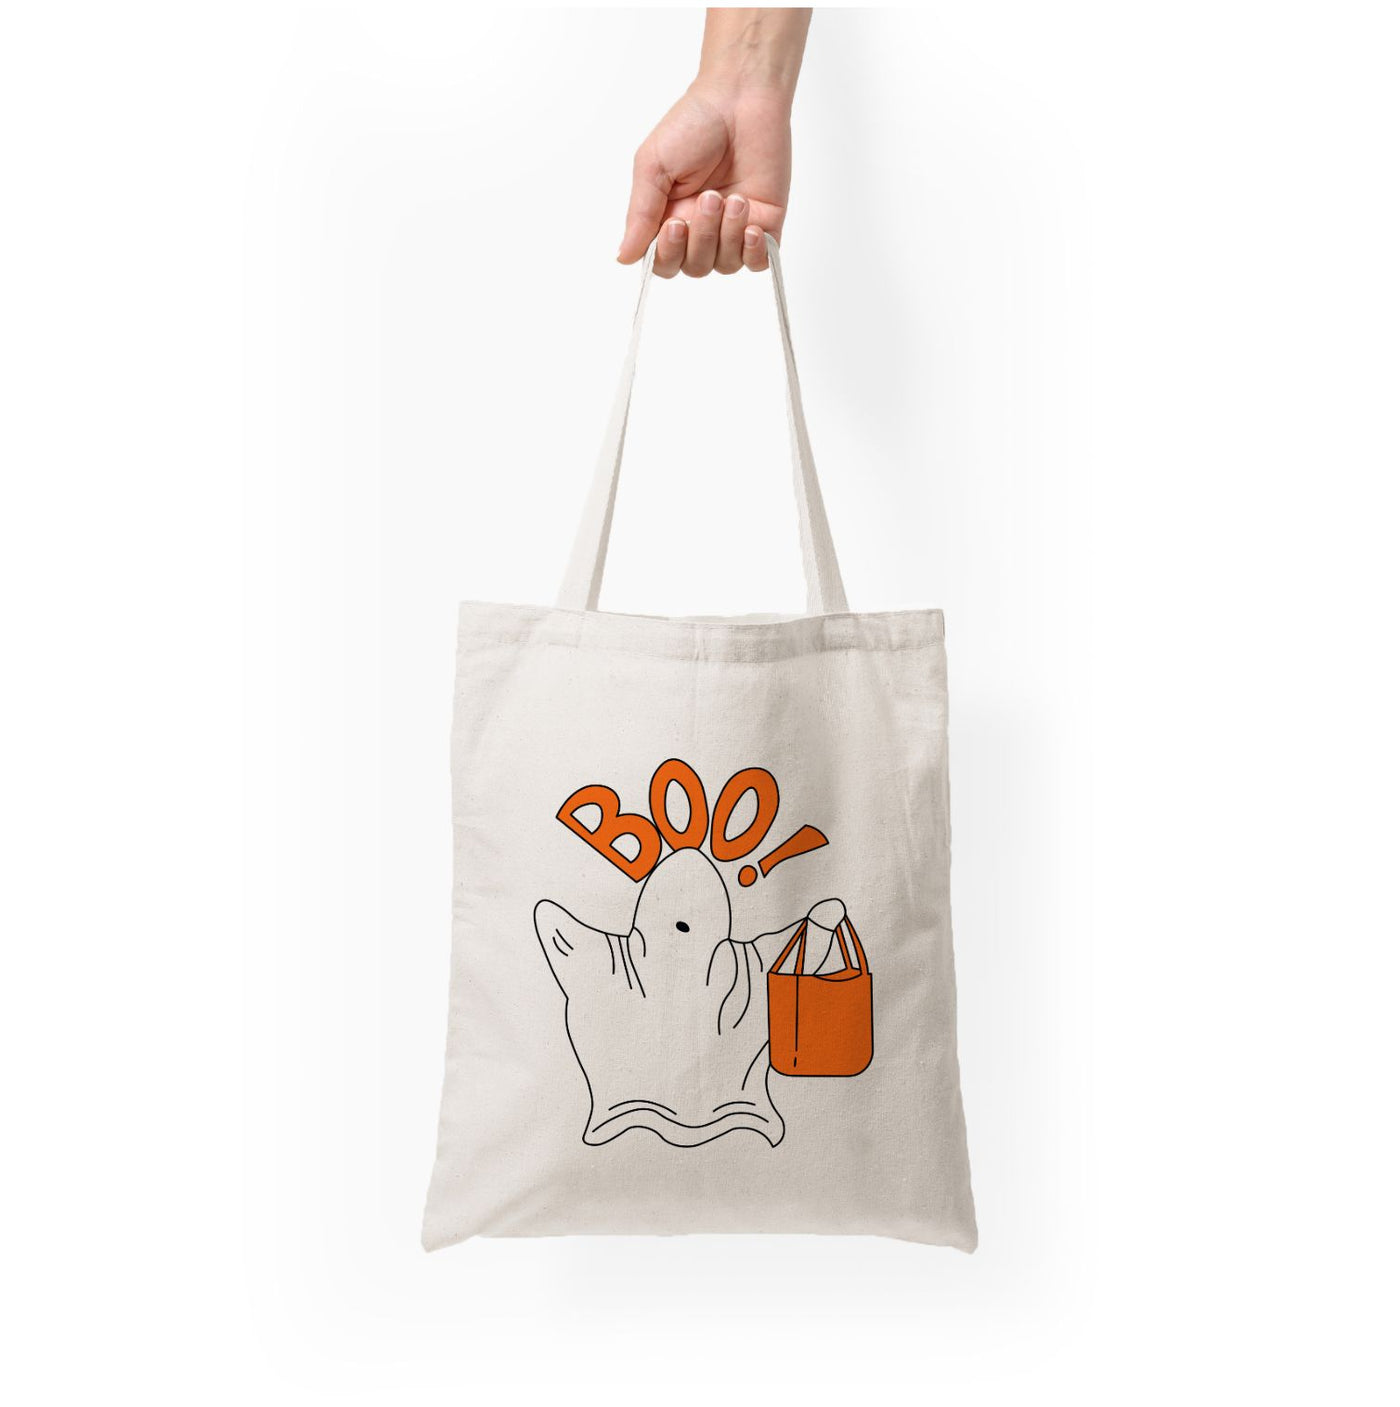 Ghost Boo! - Halloween Tote Bag